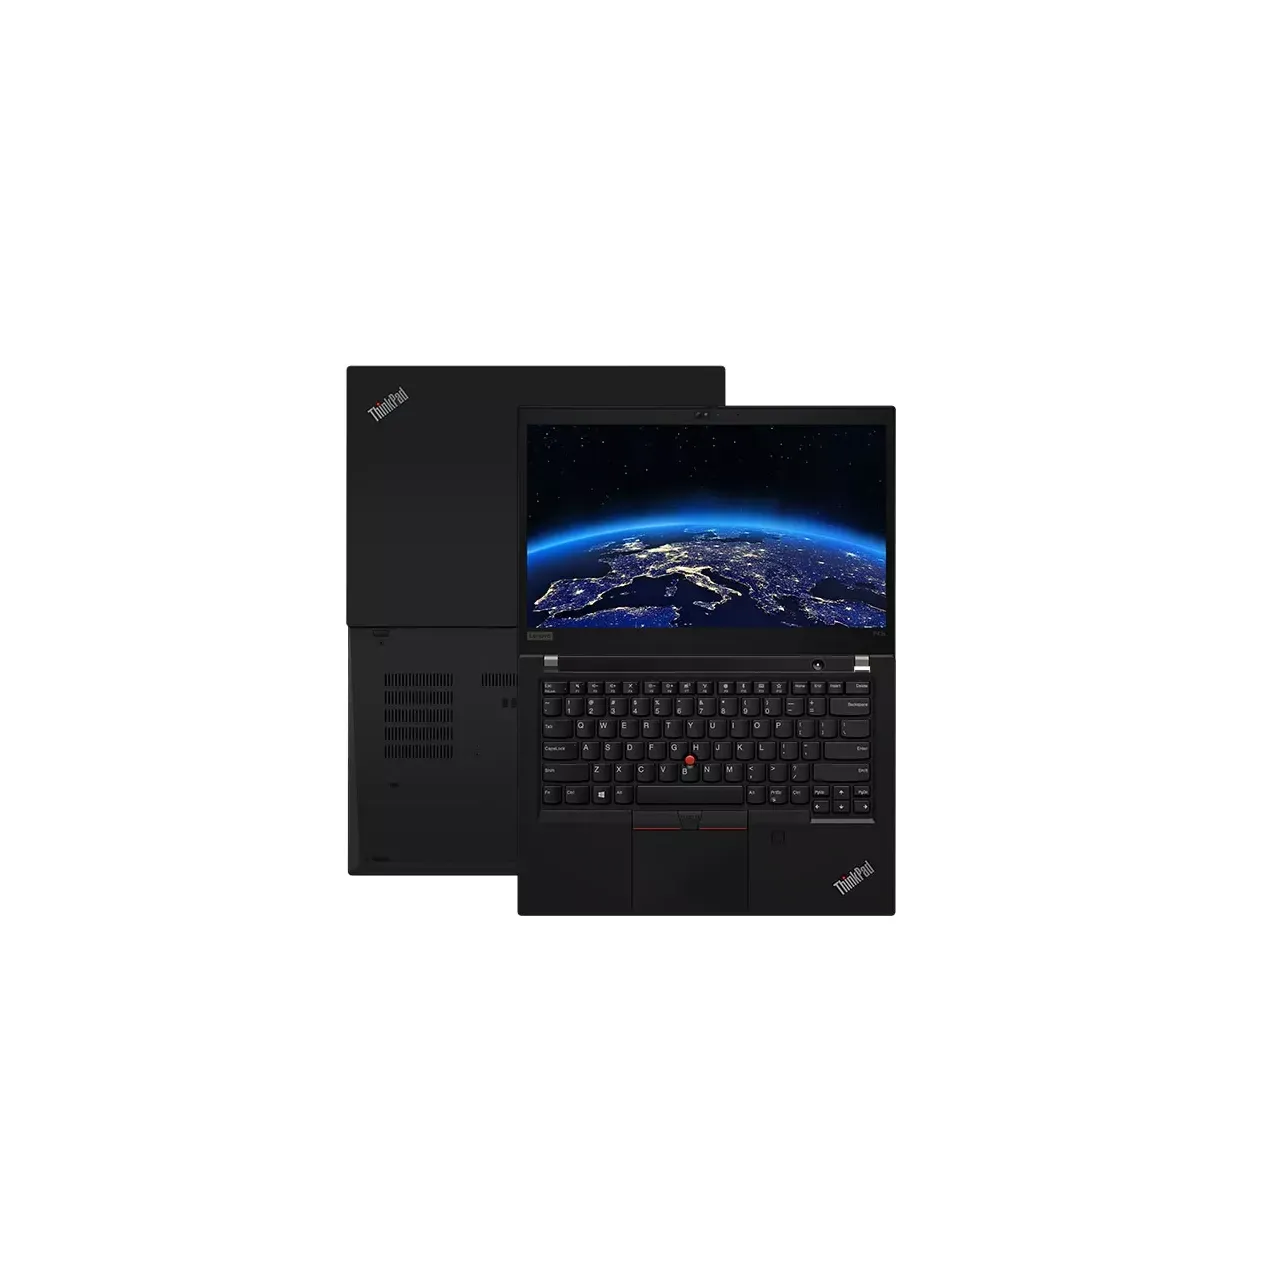 Noutbuk Lenovo ThinkPad P43s Mobile Workstation  / 20RHS00600 / 14.0" Full HD 1920x1080 IPS / Core™ i5-8365U / 8 GB / 256 GB SSD / Quadro P520#4